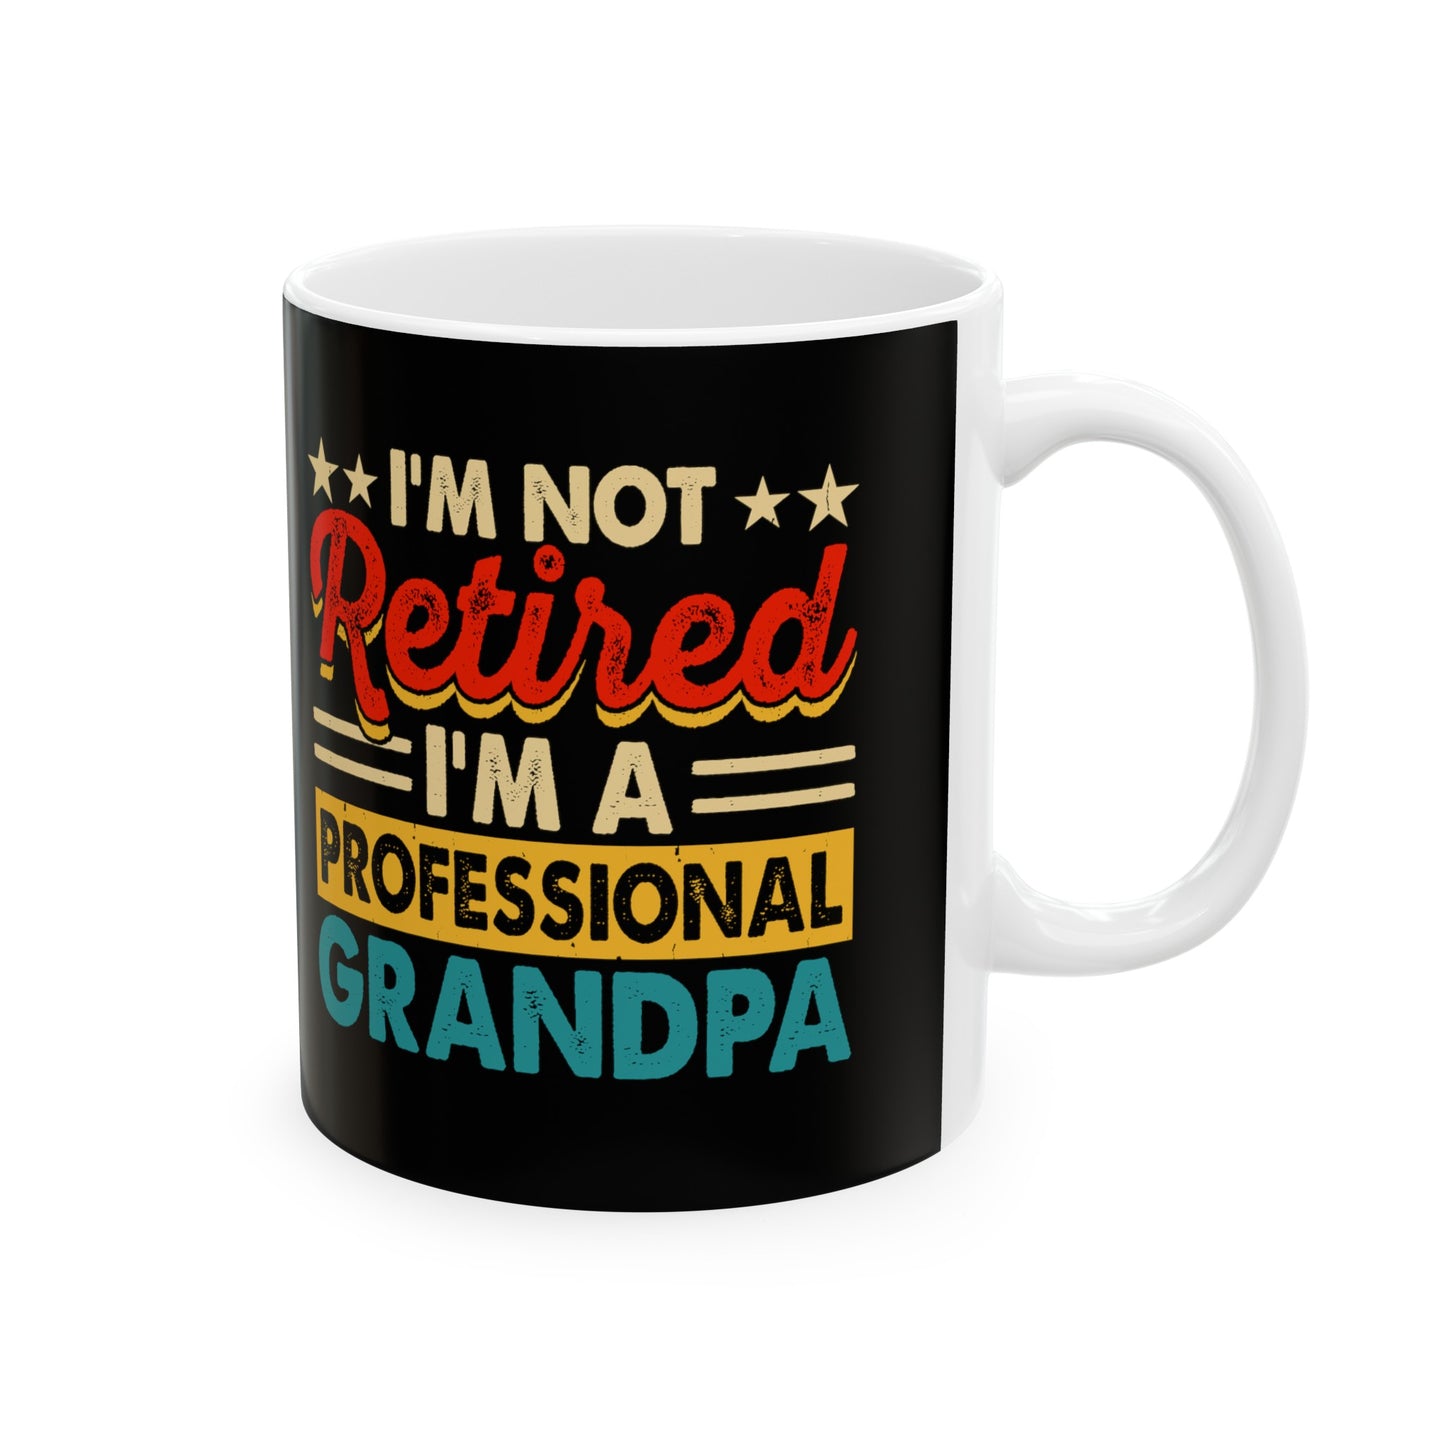 I'm Not Retired I'm A Professional Grandpa Ceramic Mug, 11oz